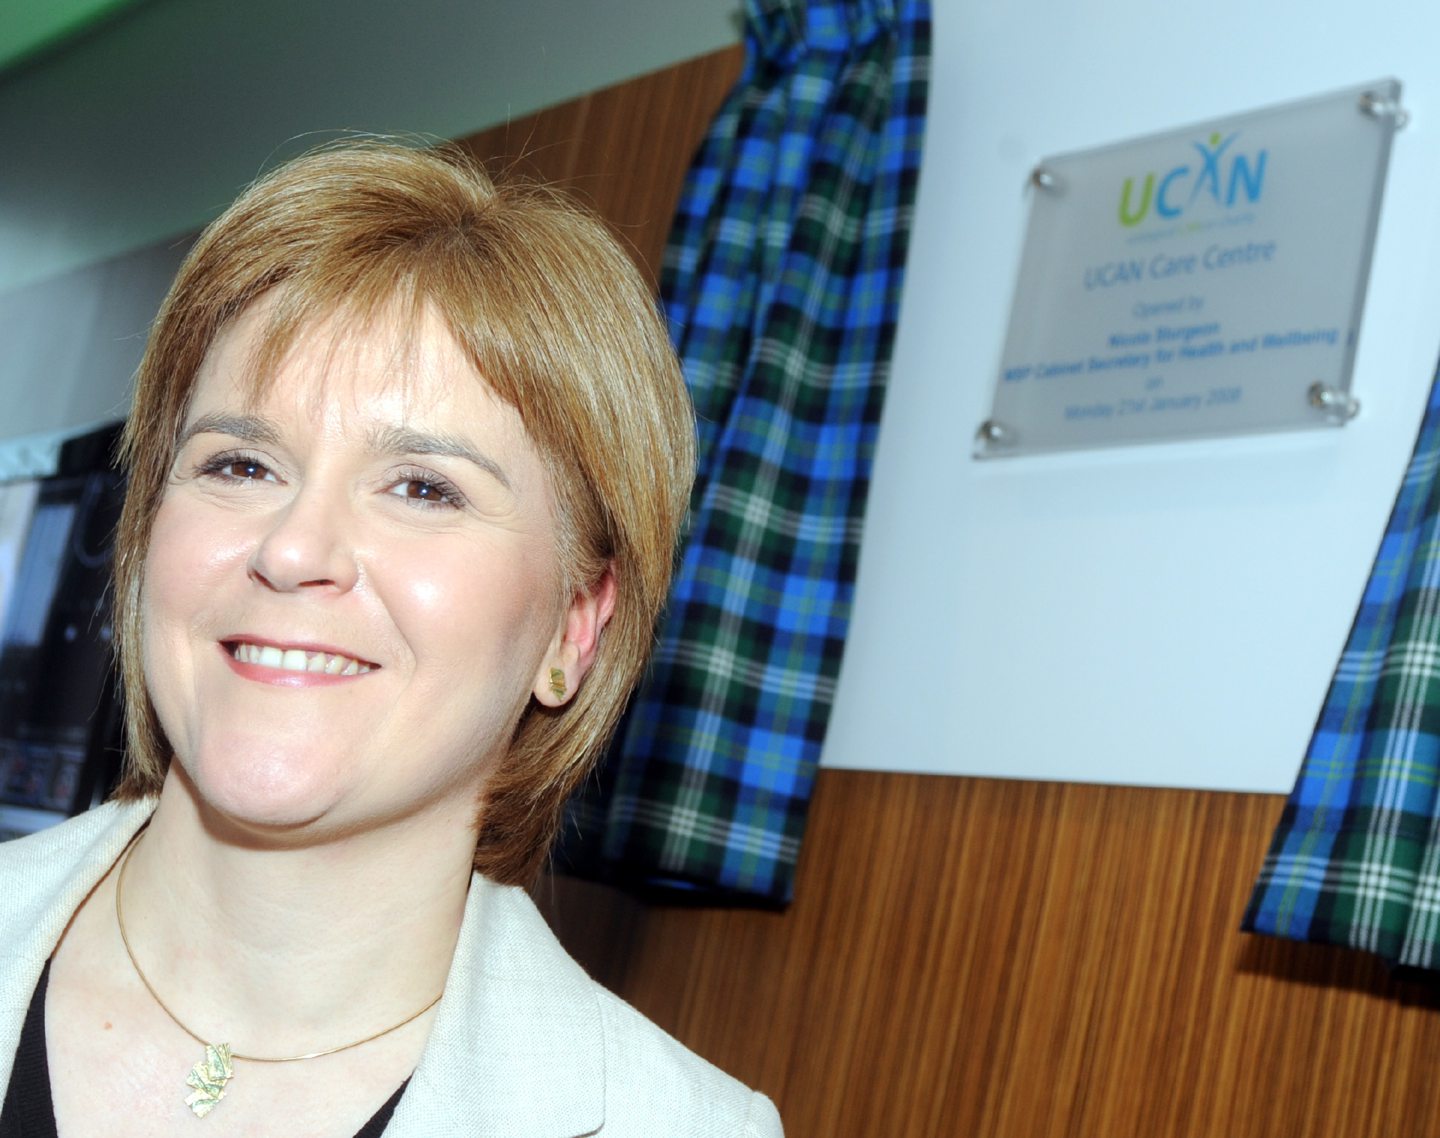 Nicola Sturgeon, then health secretary, opened the Aberdeen UCAN centre in 2008. Image: Jim Irvine/ DC Thomson